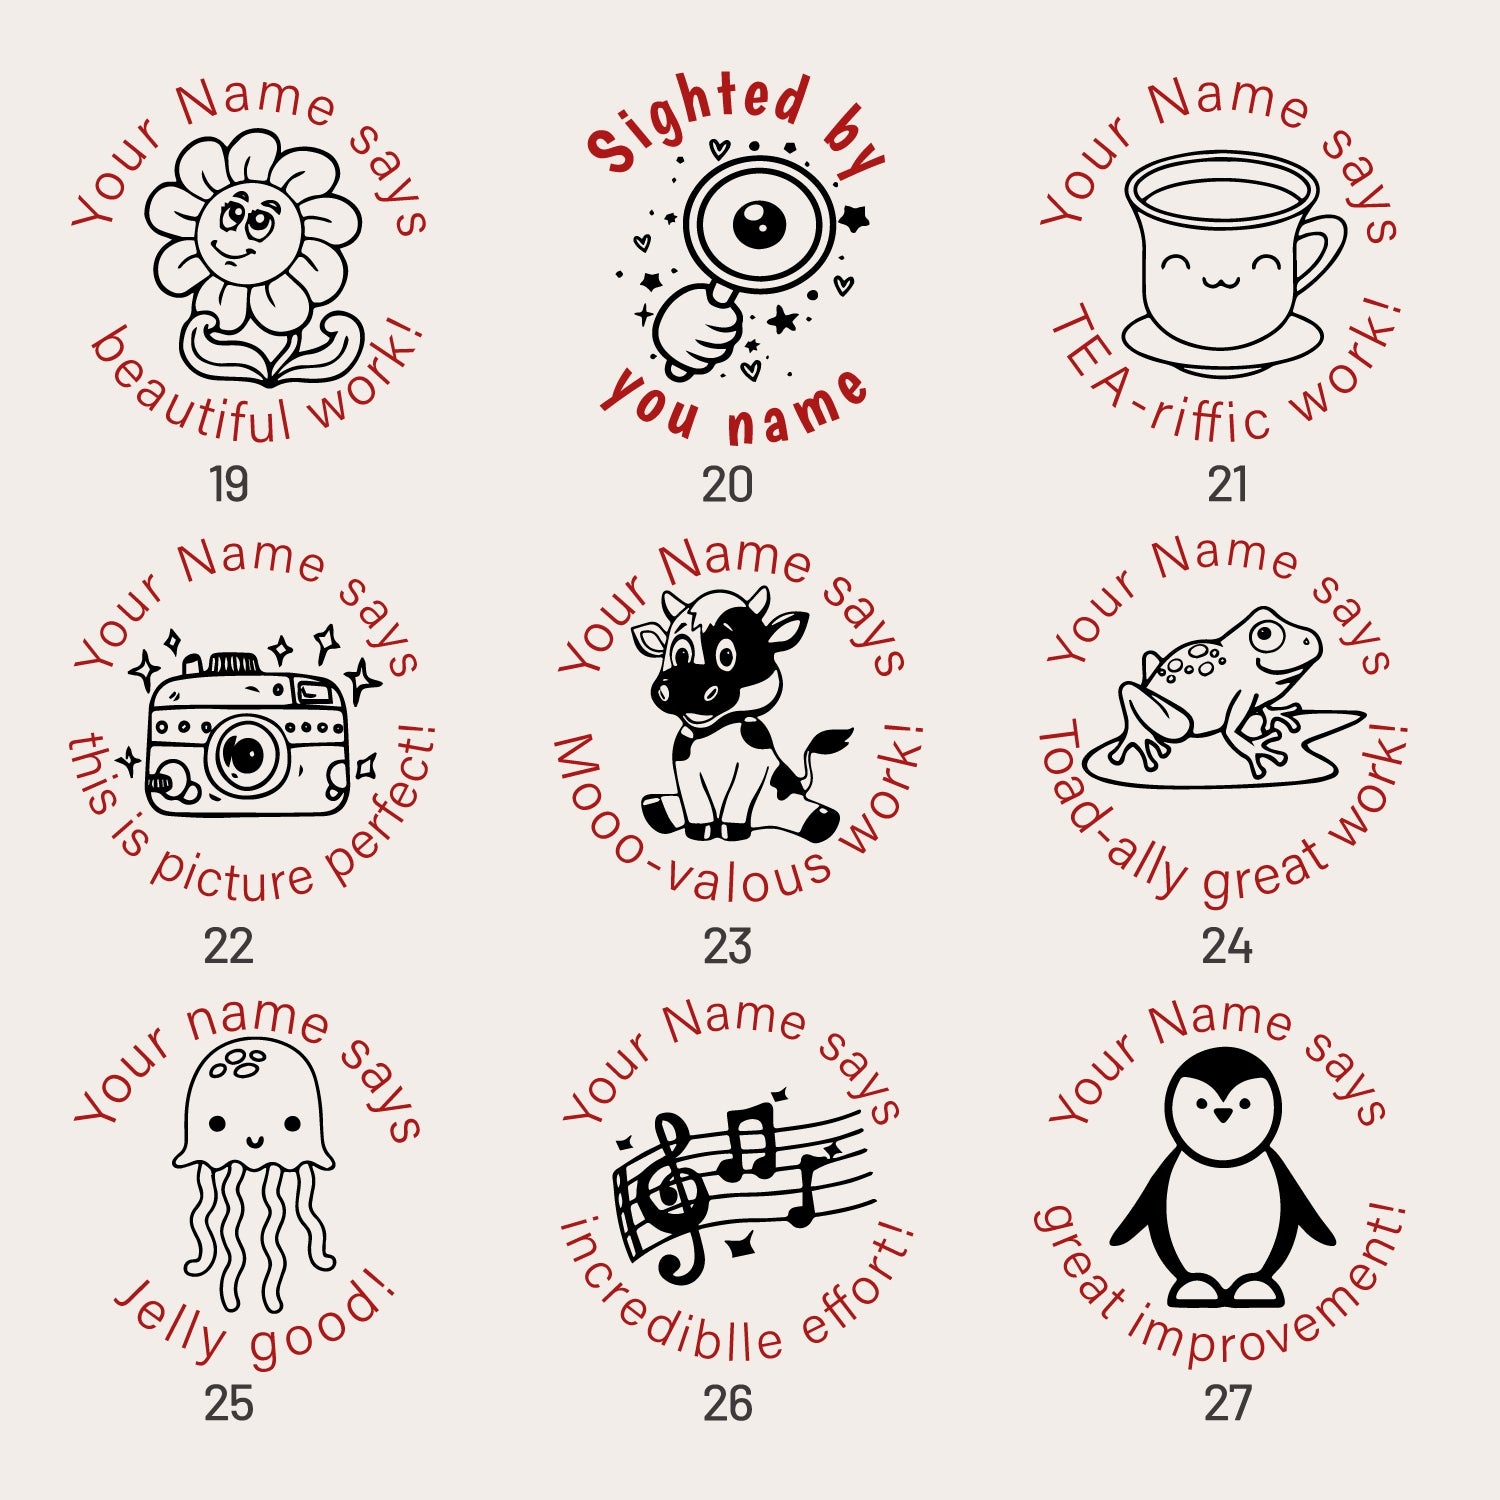 Children's Day Custom Cartoon Rubber Stamp (27 Designs)sku19-27